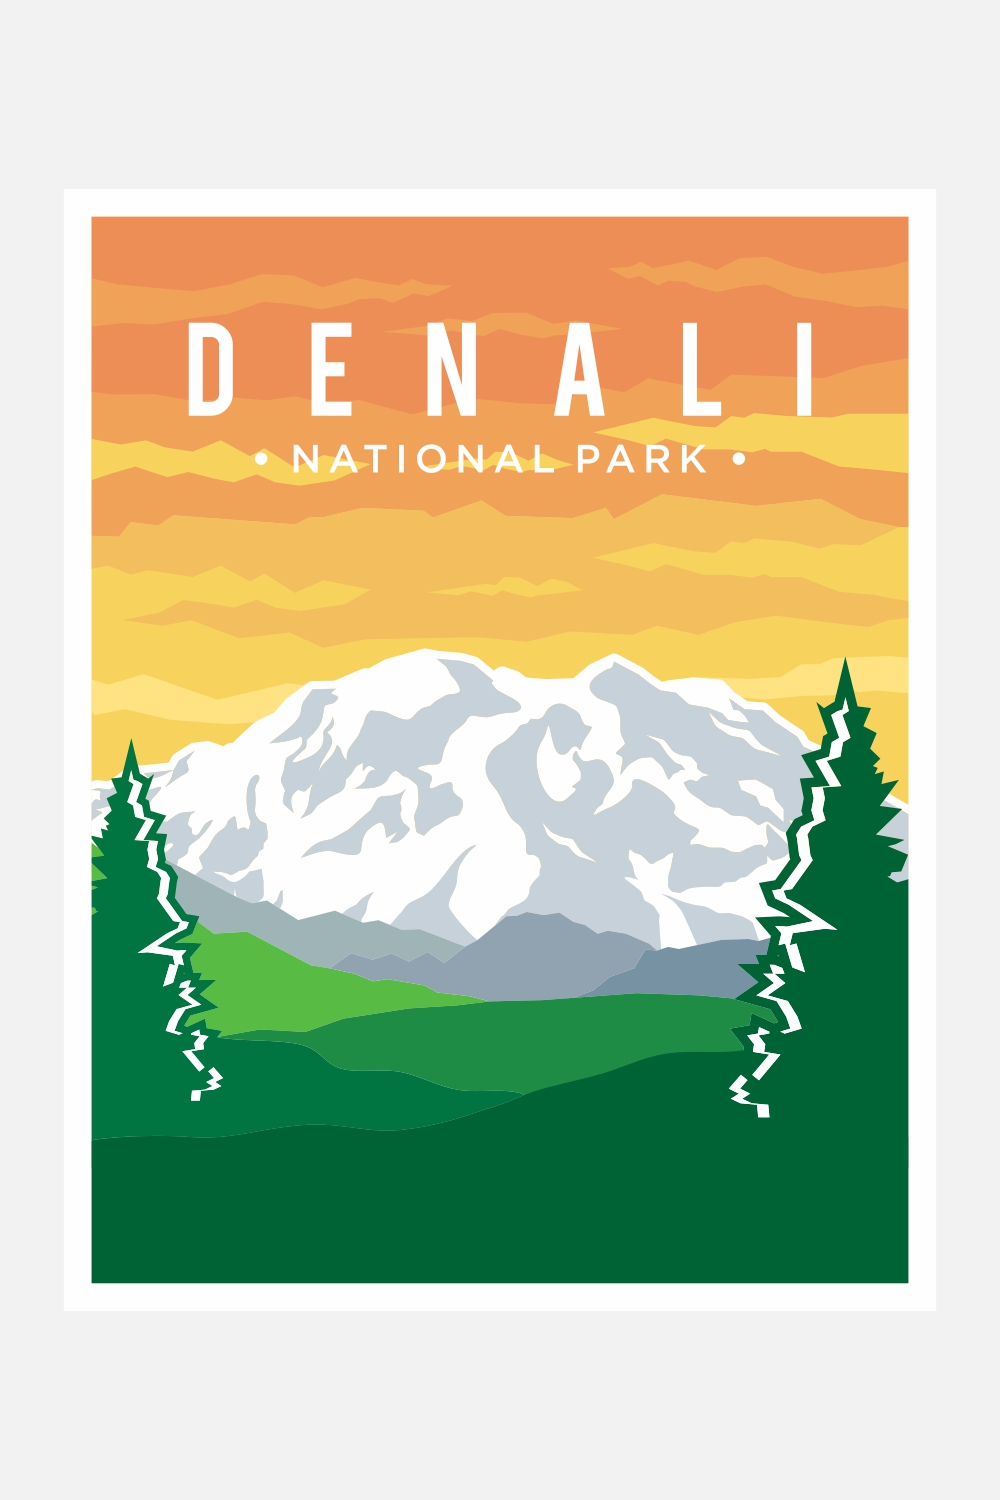 Denali National Park poster vector illustration design – Only $8 pinterest preview image.